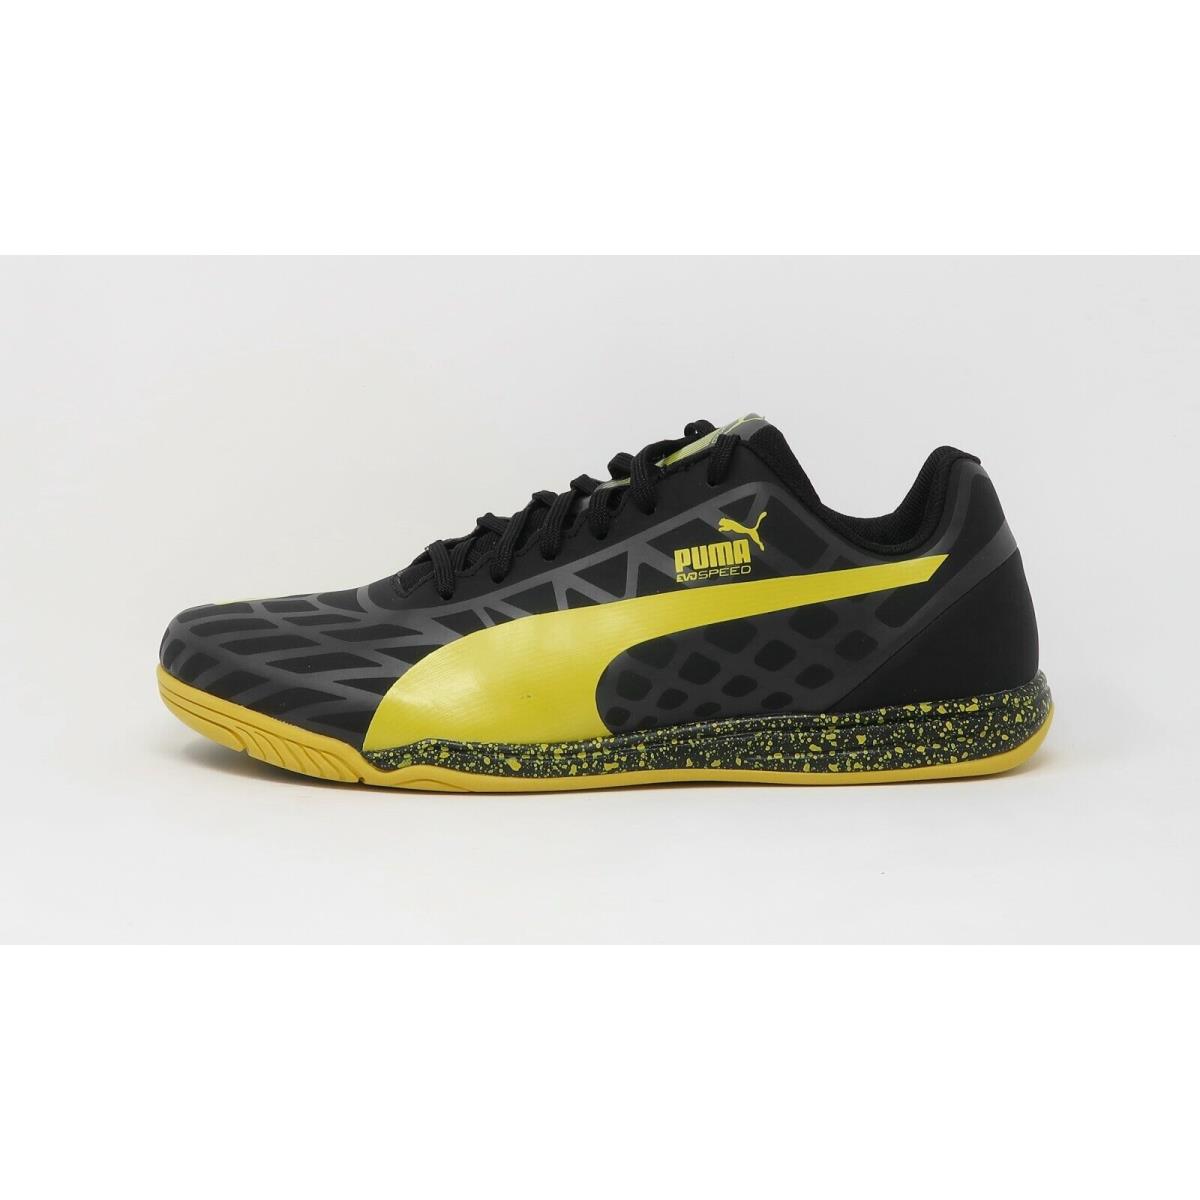 Puma Evospeed Star IV Black Blazing Yellow Shoes Men Women Sneakers